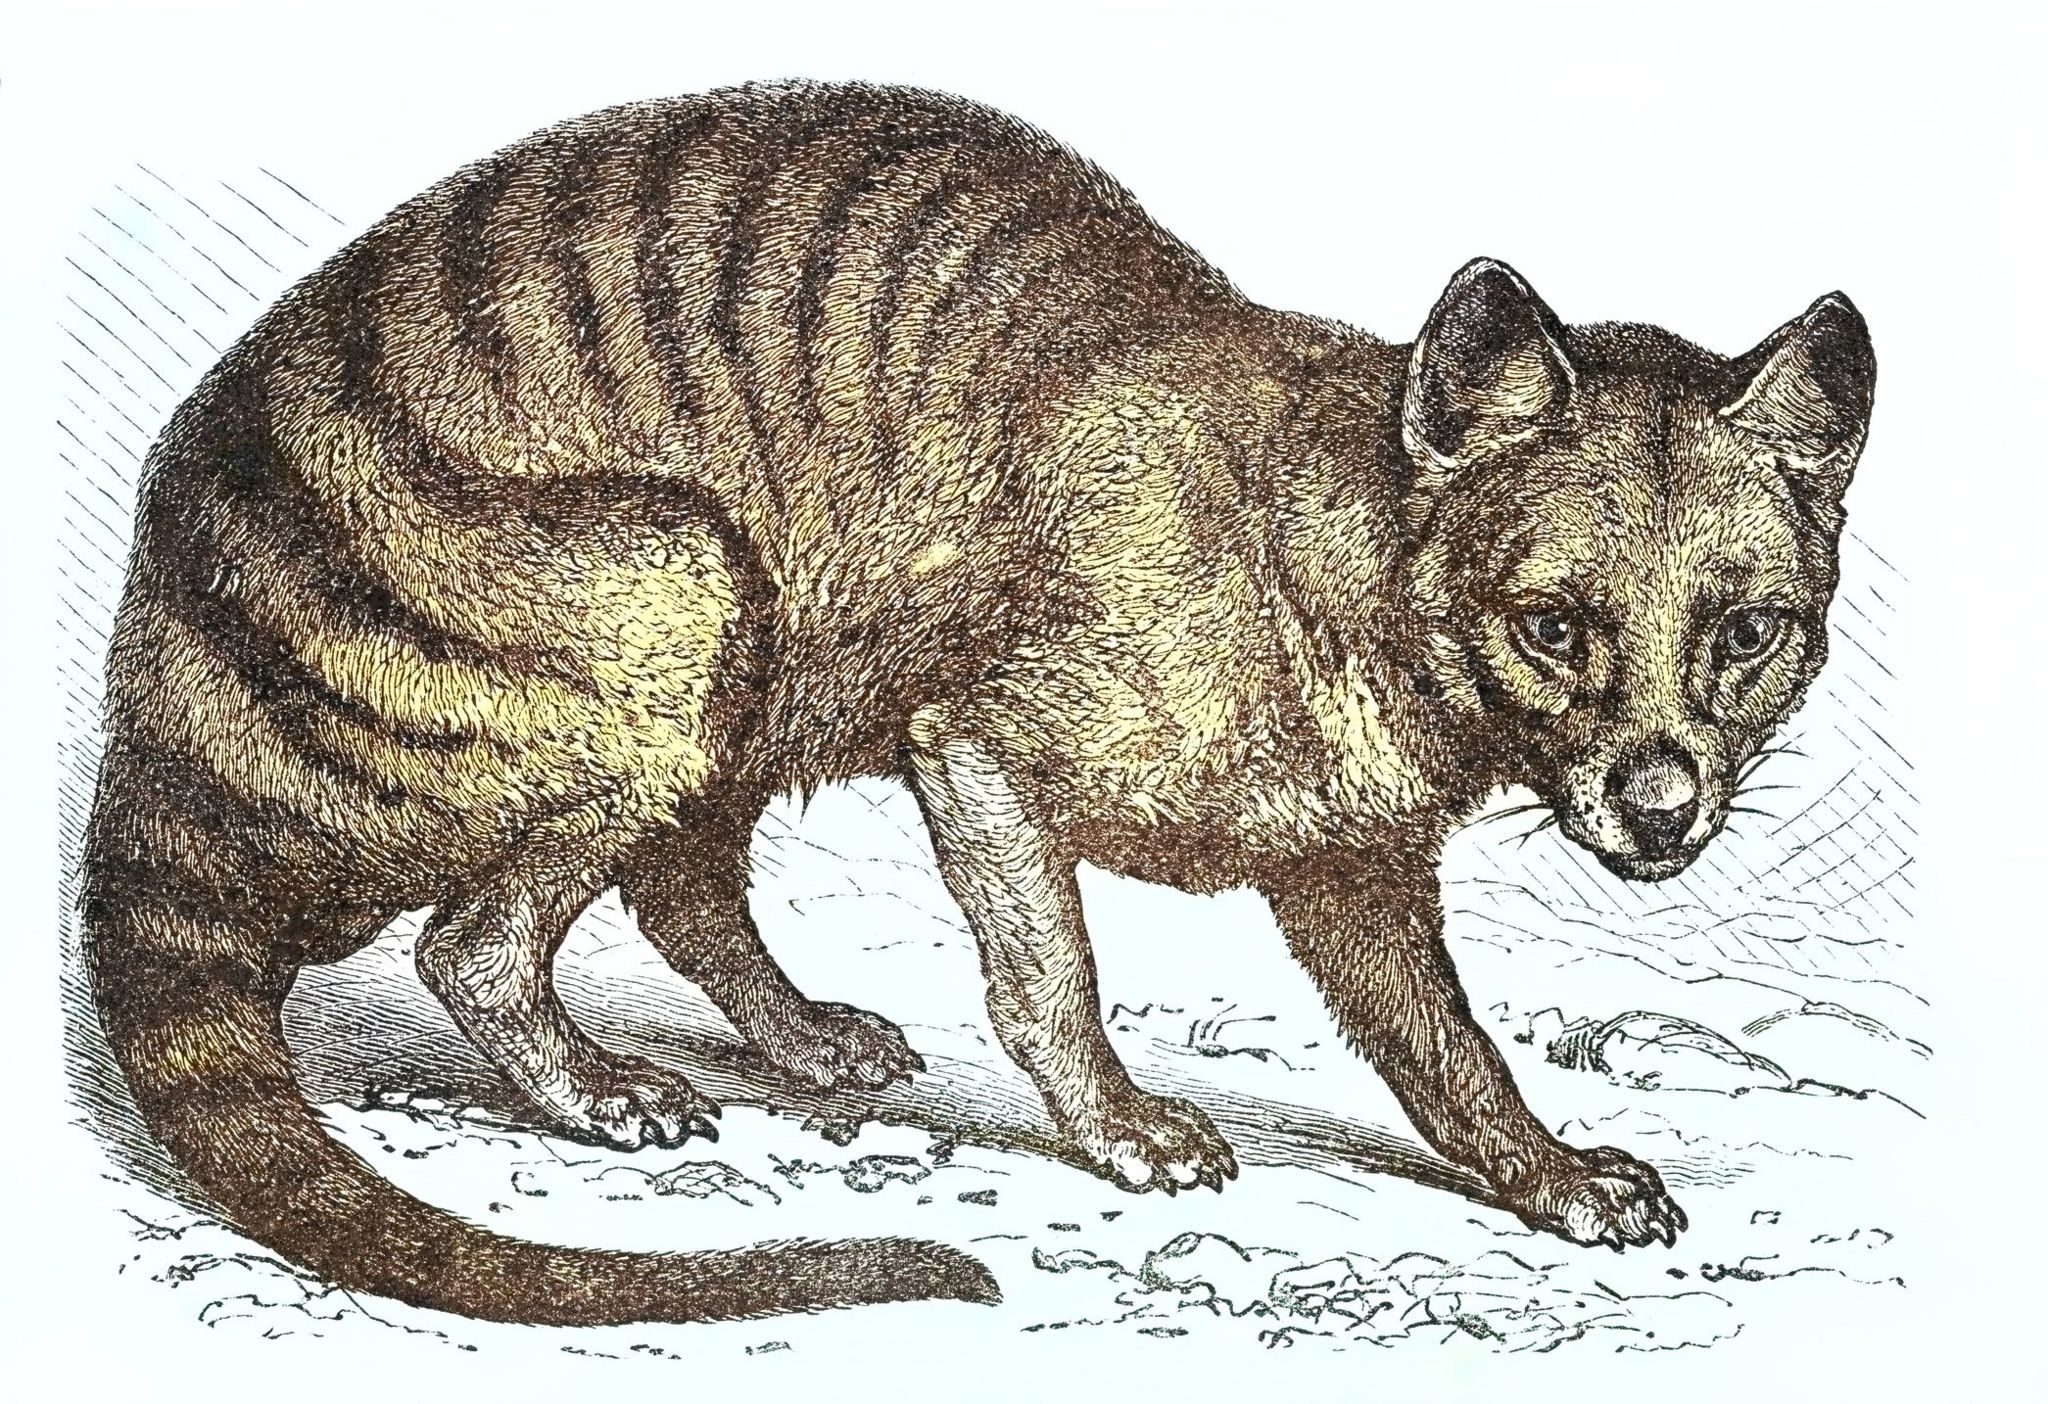 Tasmanian tiger: The enduring belief in an extinct animal - BBC News